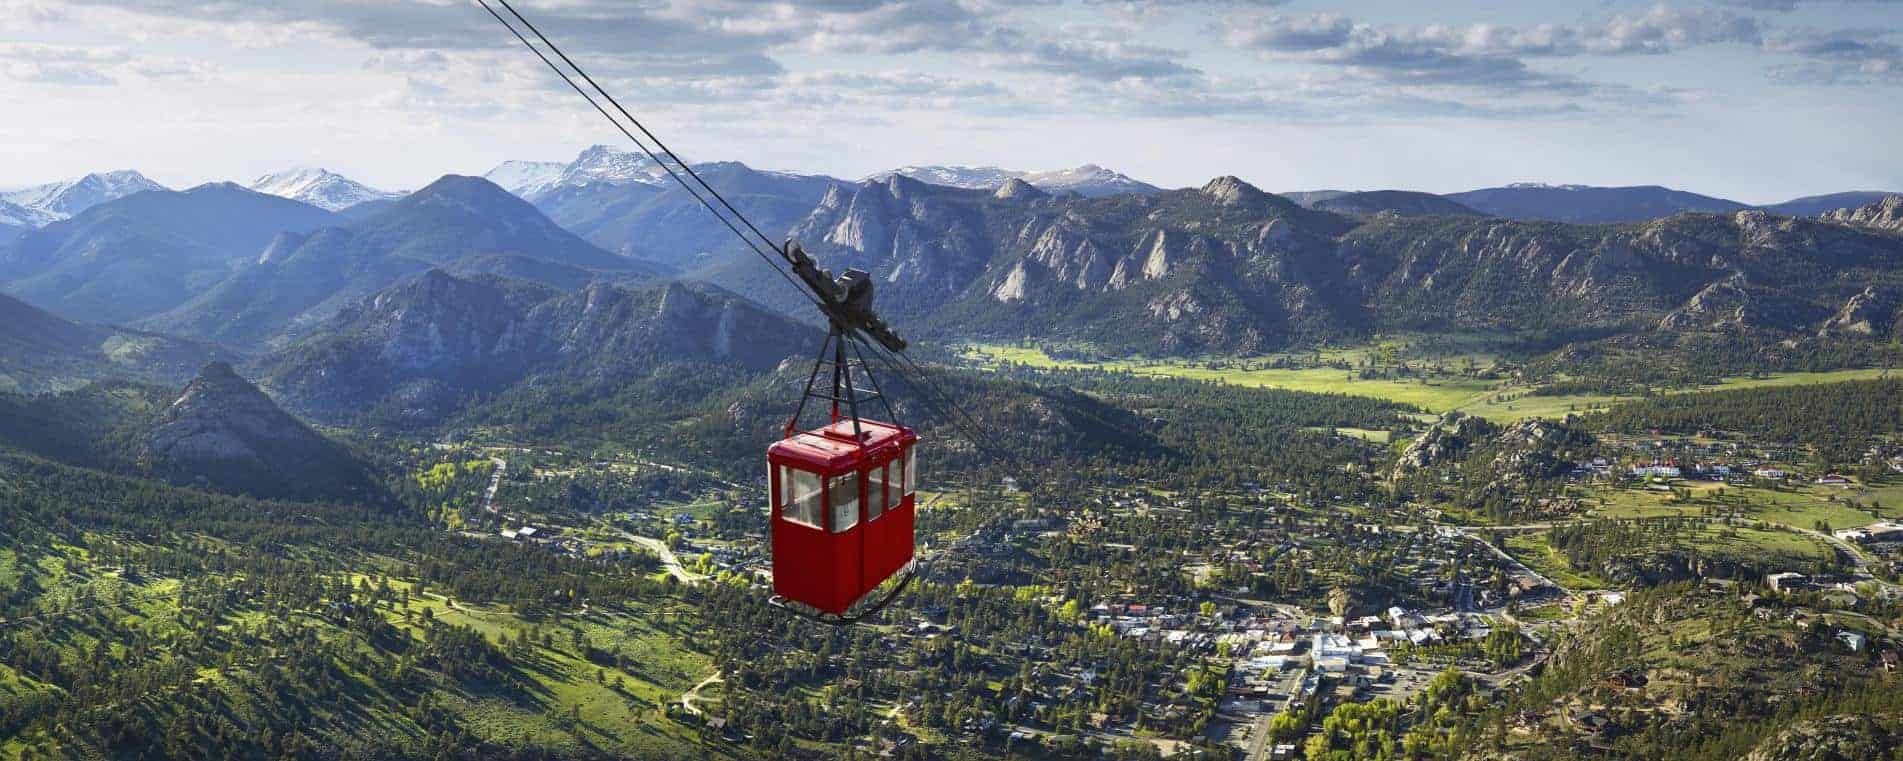 Estes Park Aerial Tram Offers an Exciting Adventure 7